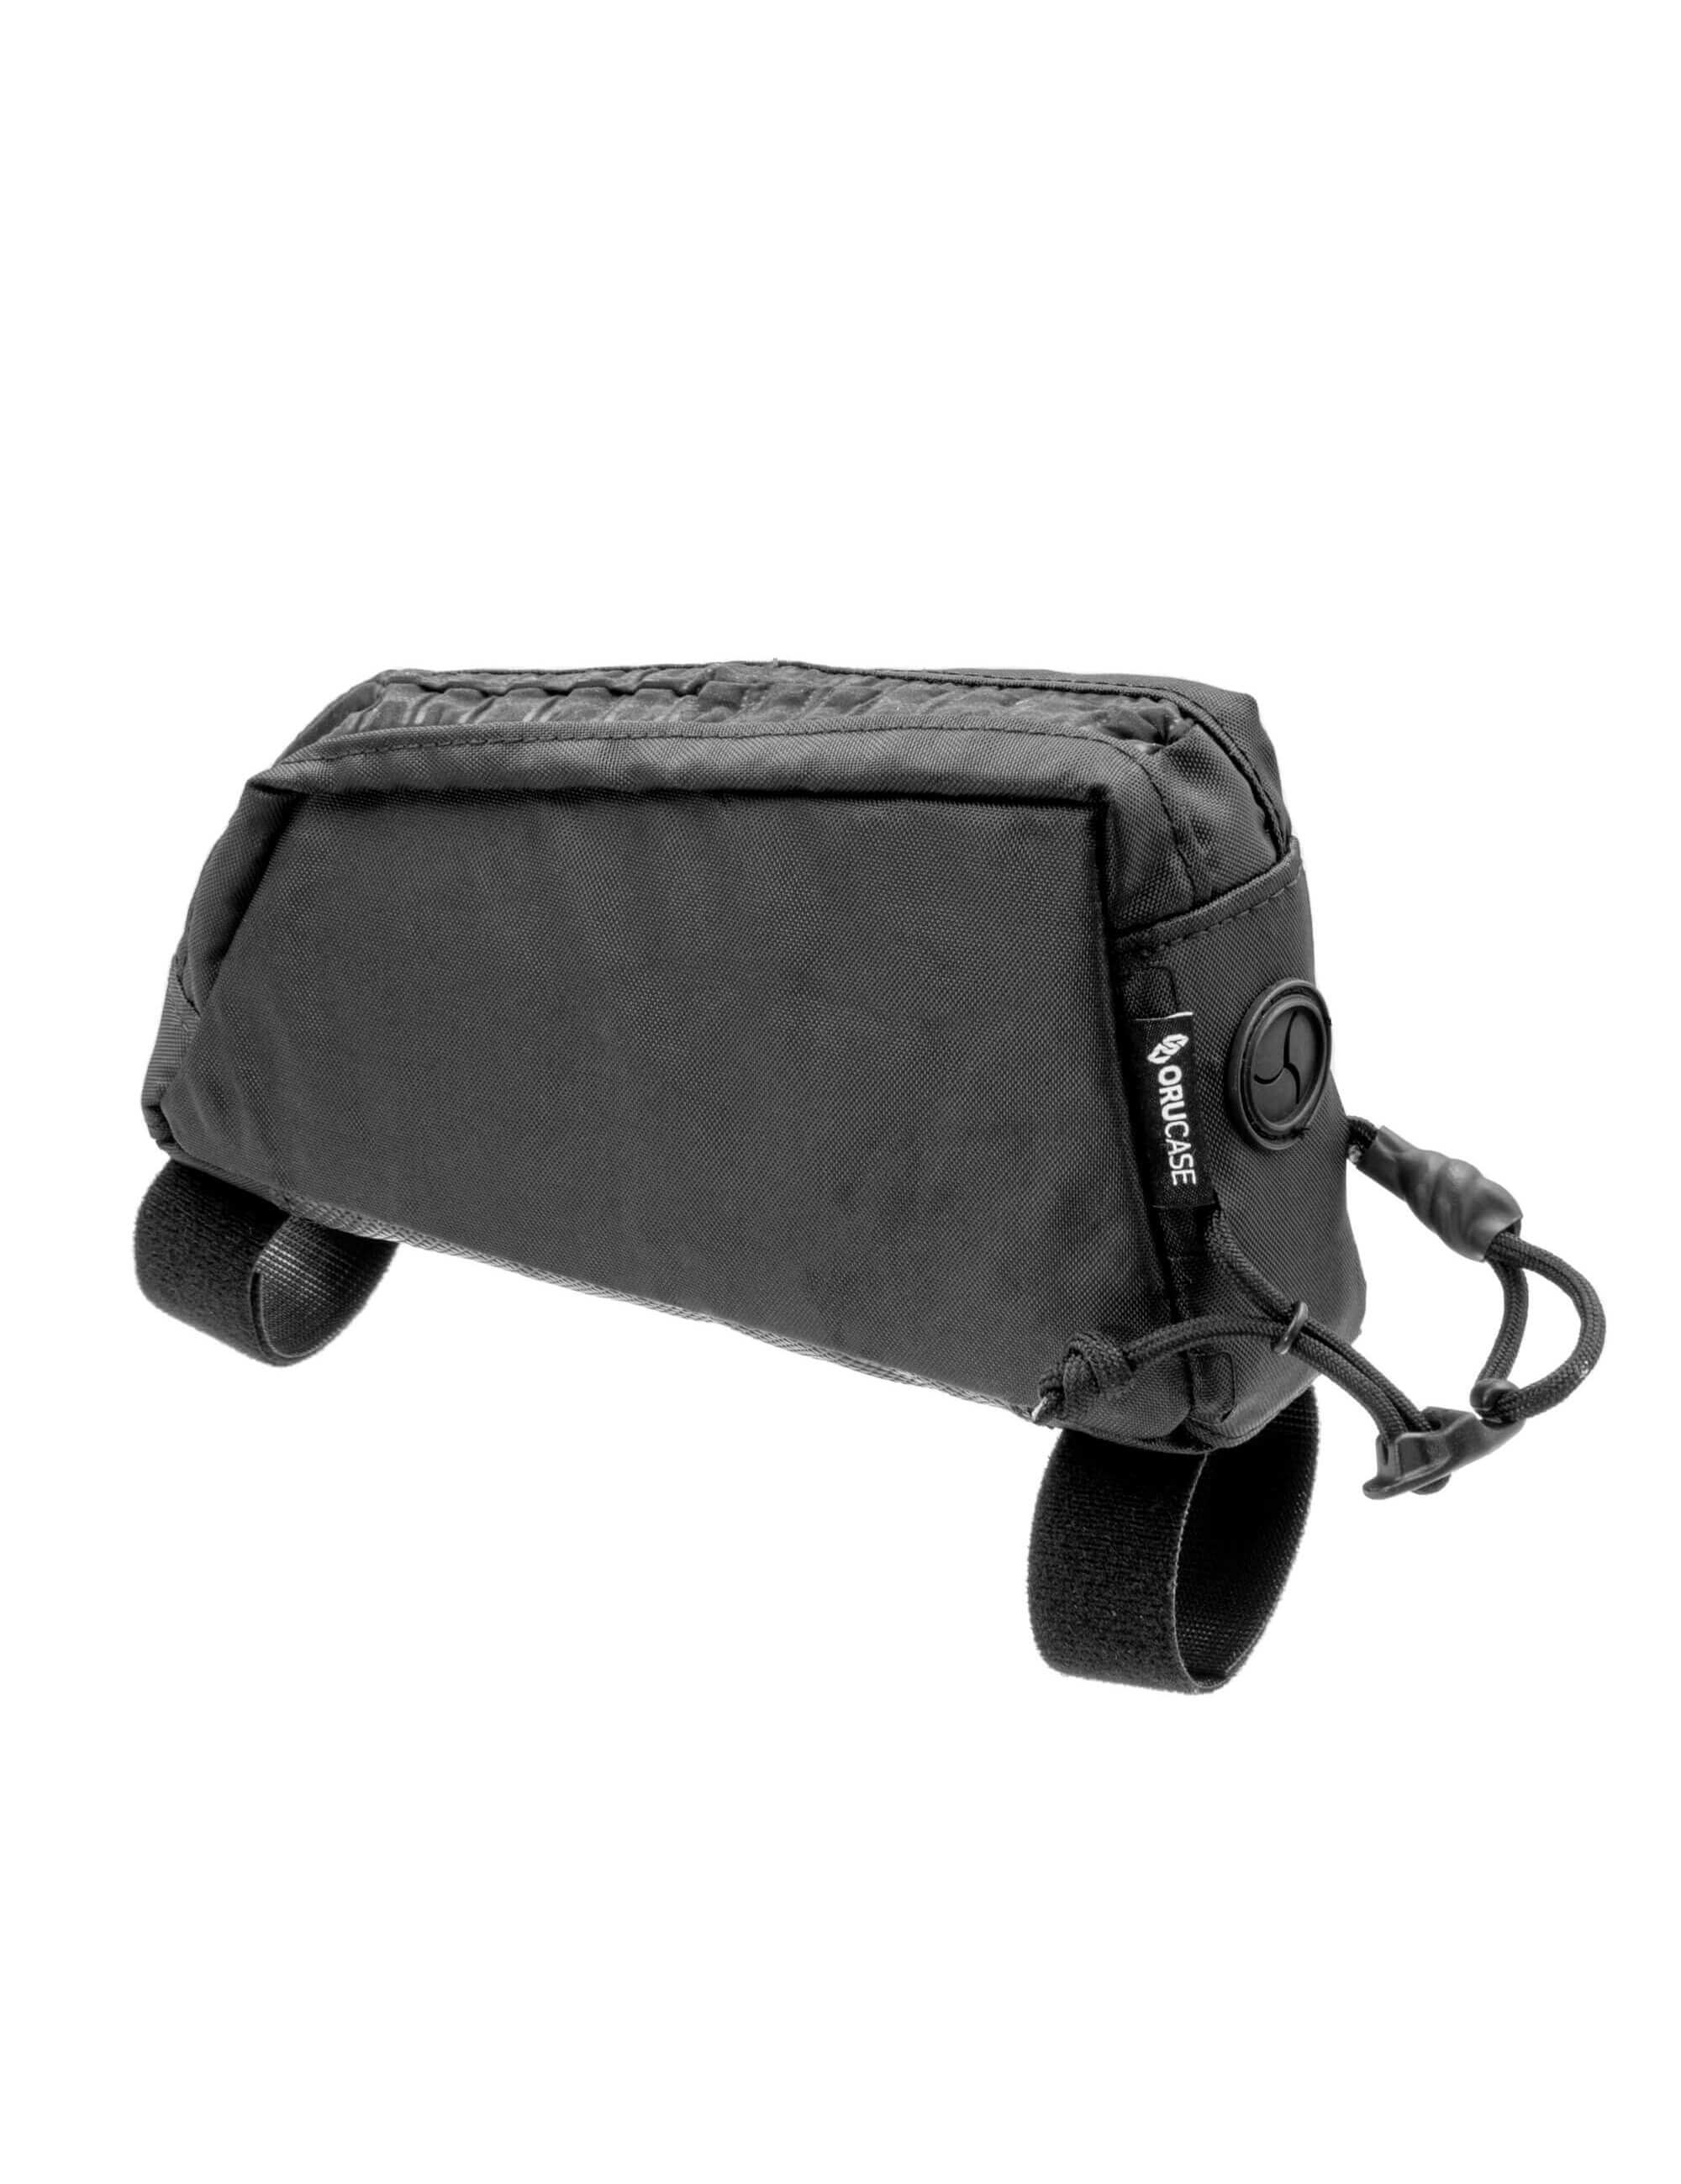 Top Tube Bag Accessories Black - Orucase